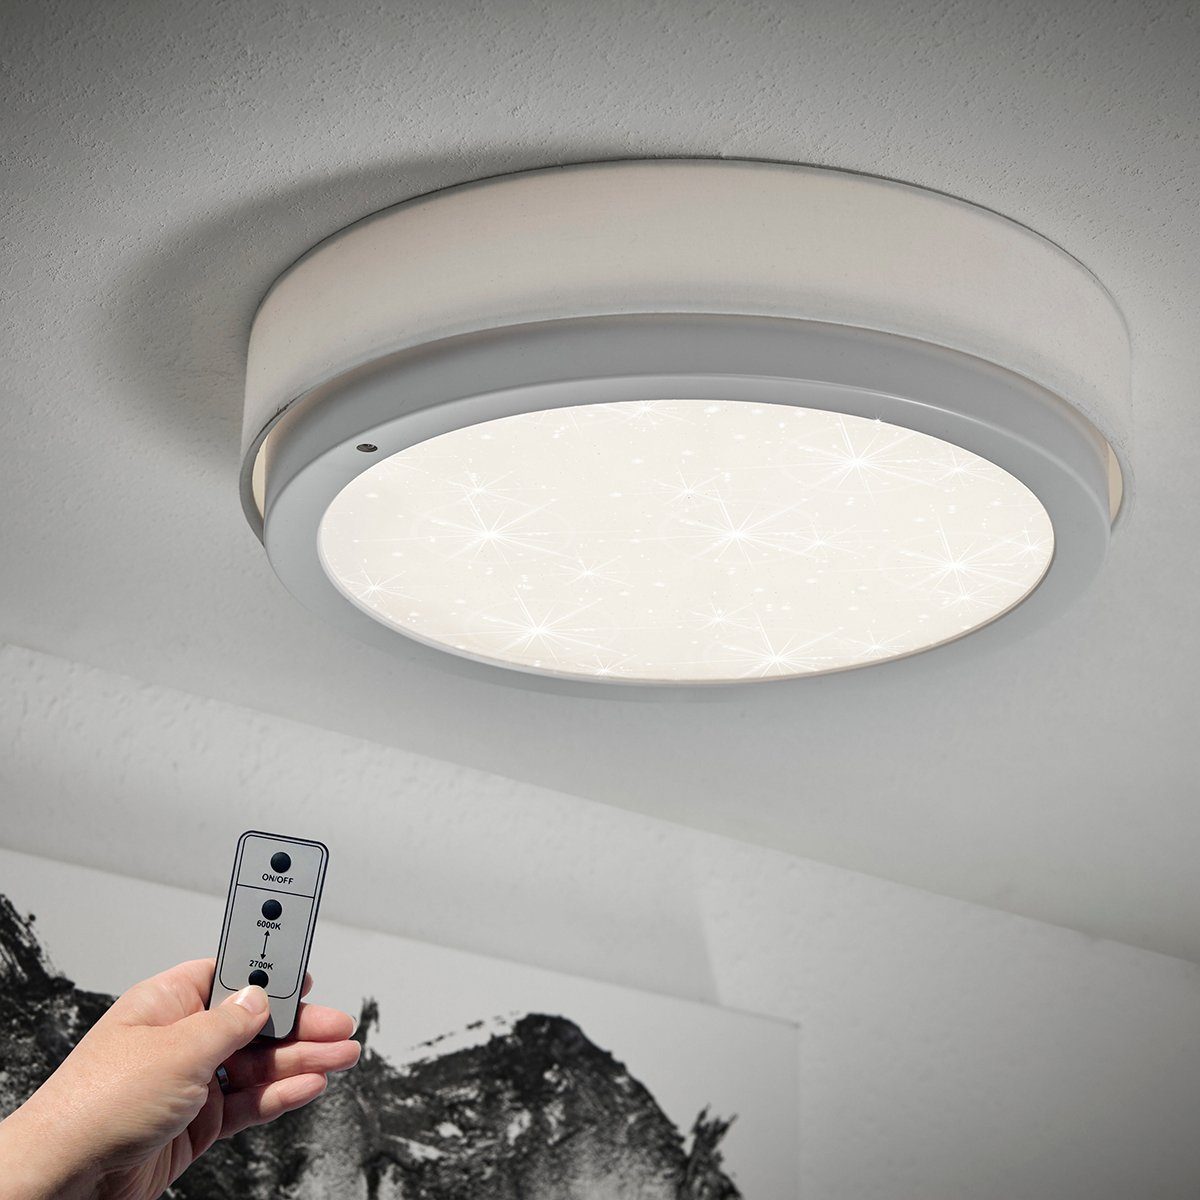 MeLiTec LED Deckenleuchte D112, LED fest integriert, warmweiß - kaltweiß, LED  Leuchte Smart Home Wand Deckenleuchte Wandlampe creme-weiß 32x8 cm